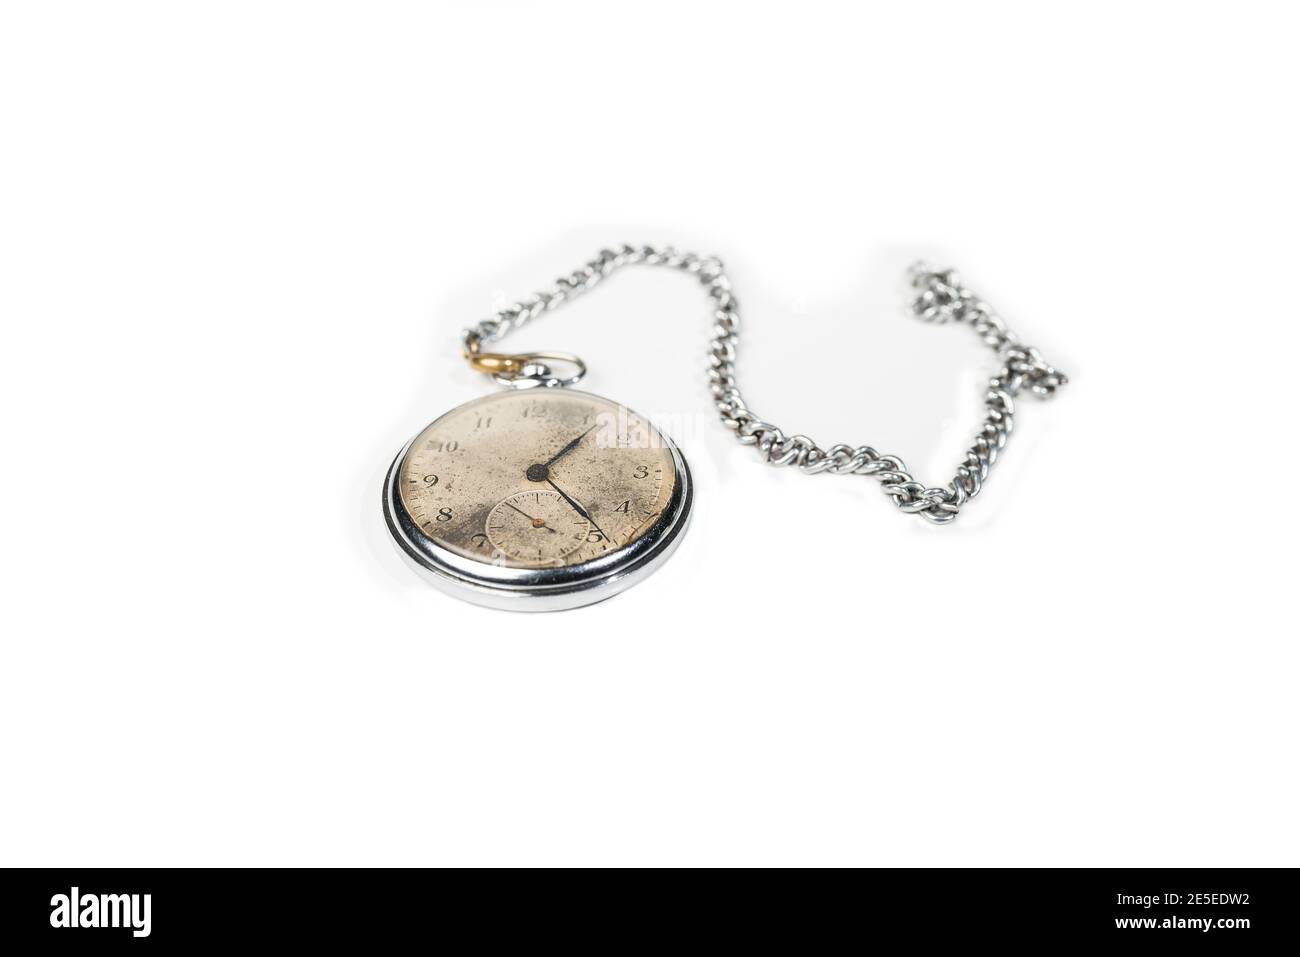 Old pocket watch on white background Stock Photo